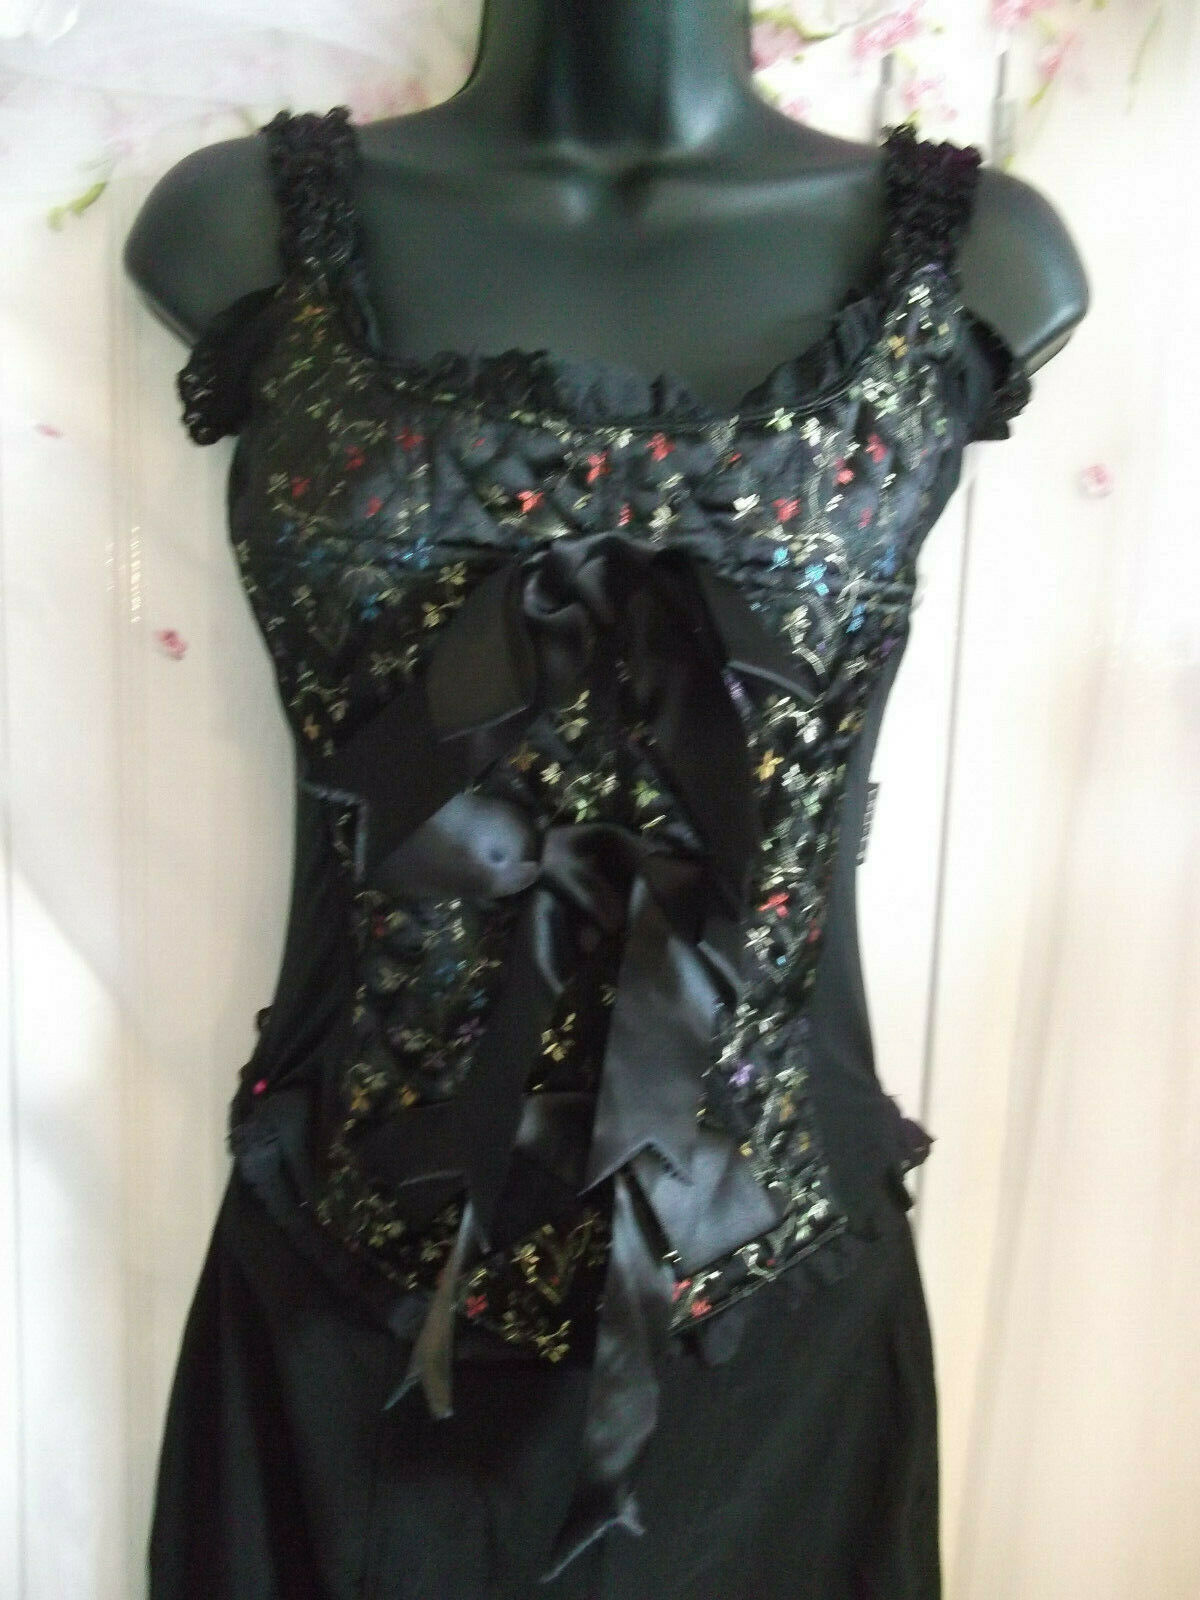 Lolita Rose Corset-black satiing/emboridered panels,satin bows,ribbons.size10/12 Wonkey Donkey Bazaar